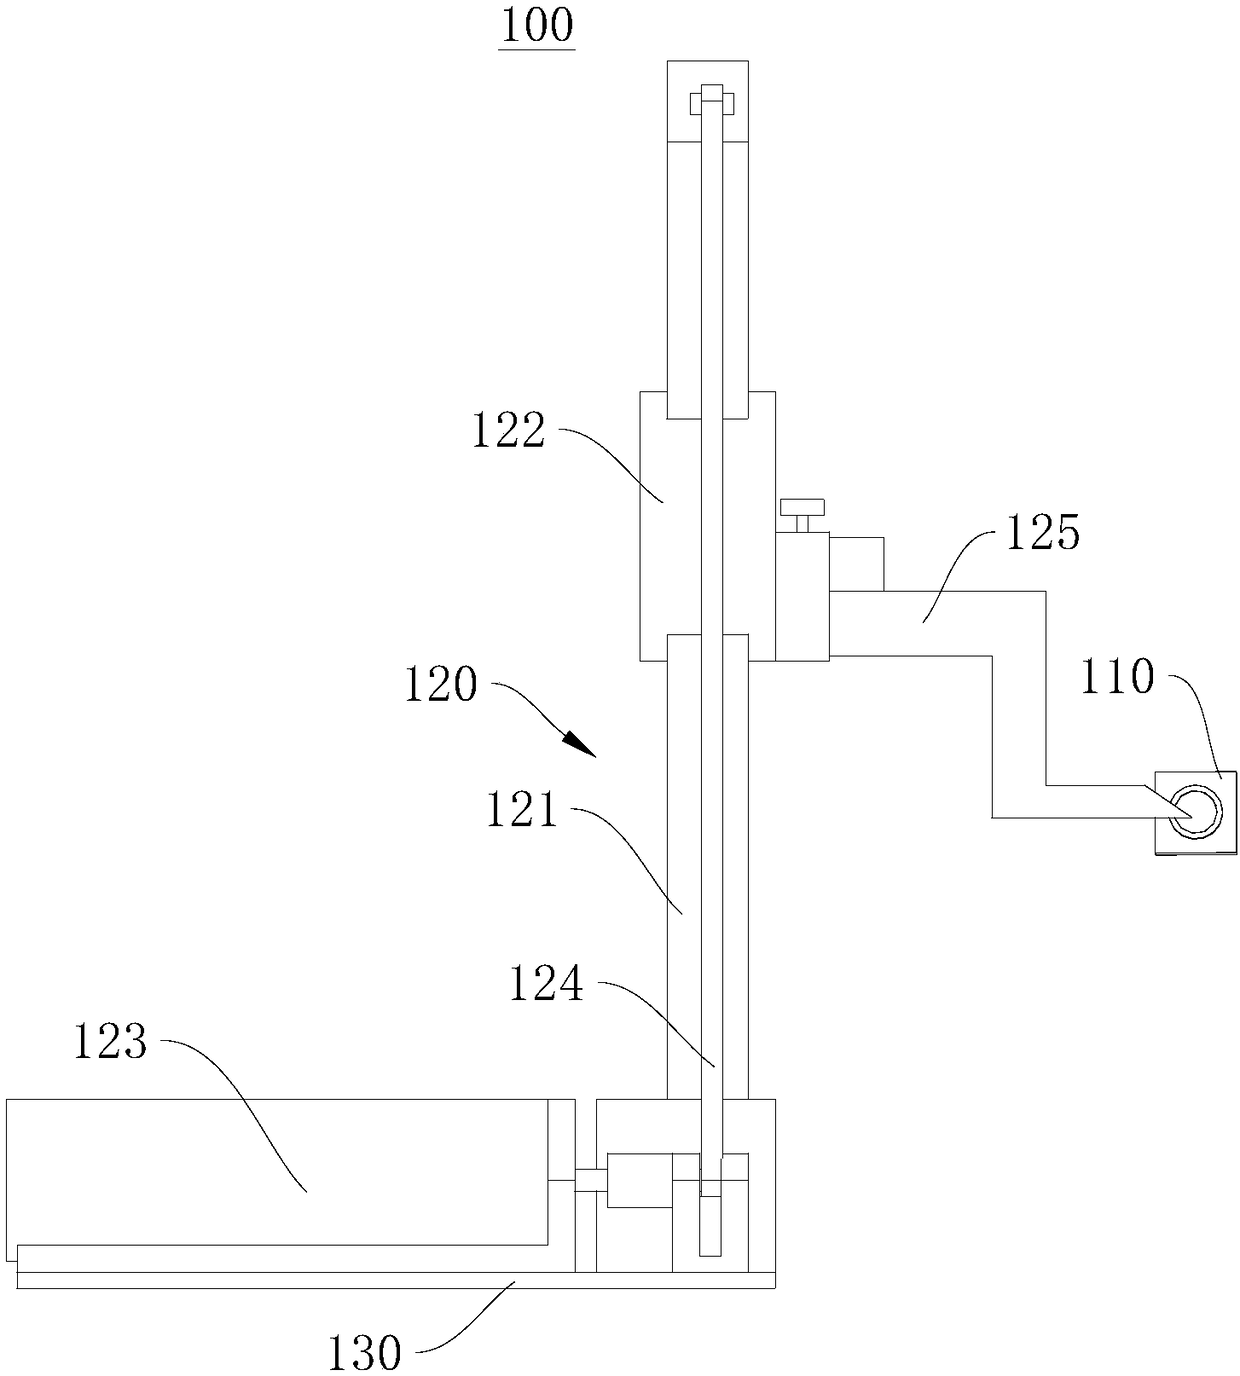 Standard metal gauge liquid level measuring device and system